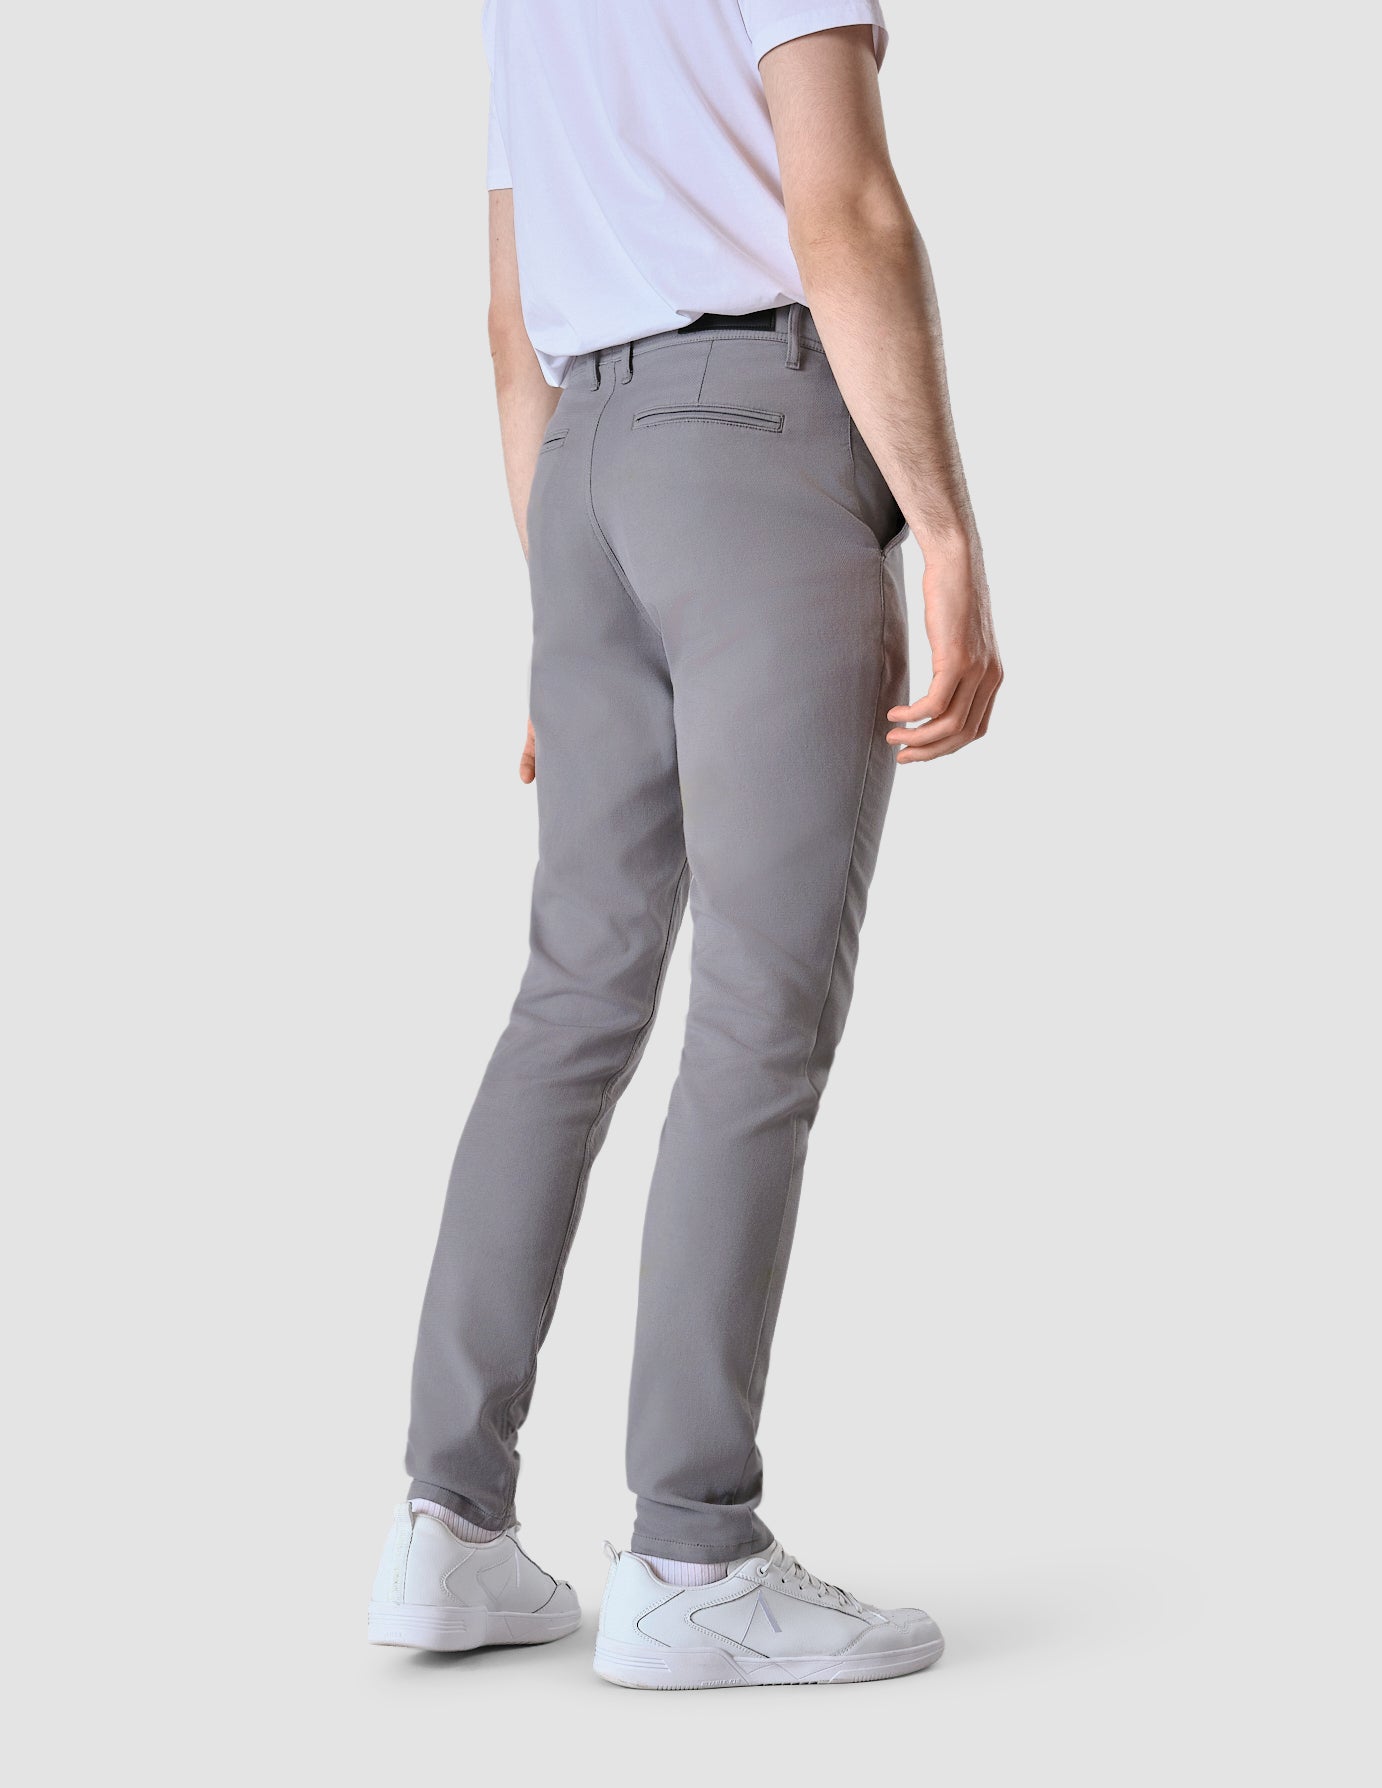 Classic Light Grey Pants